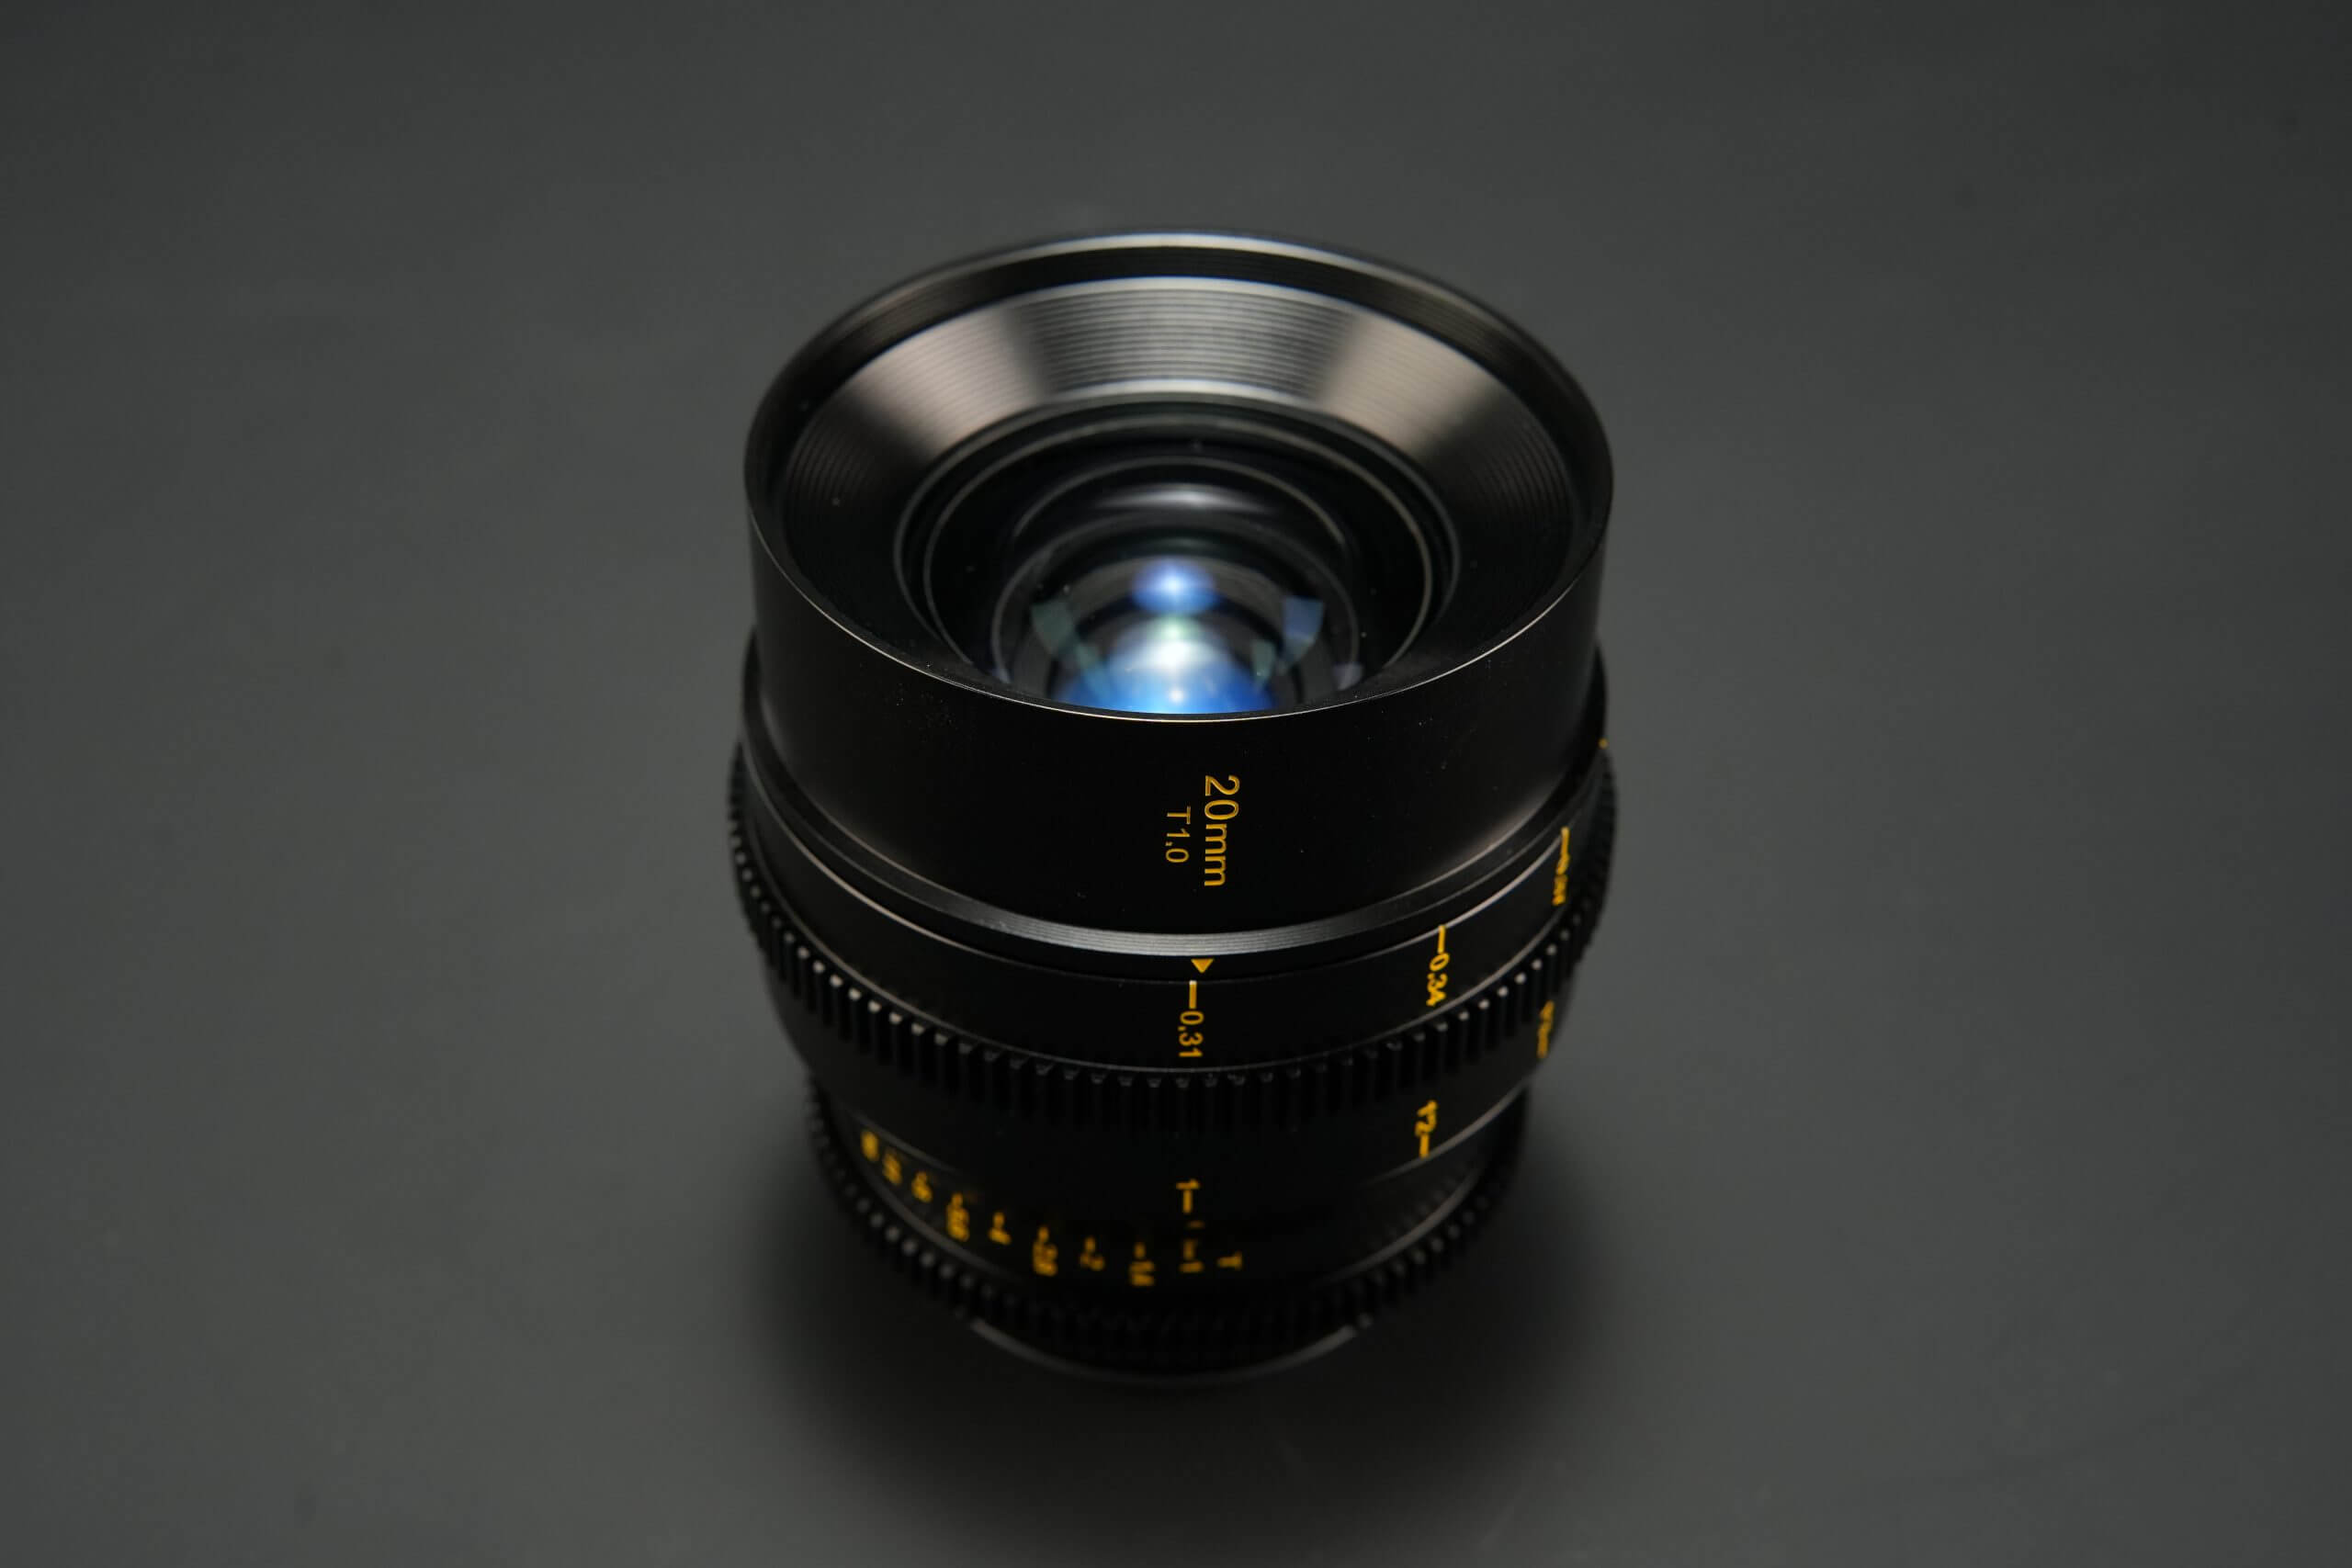 DSC07630 scaled - Mitakon Speedmaster 20mm/35mm/50mm S35 T1 Cine Lens Set Launched